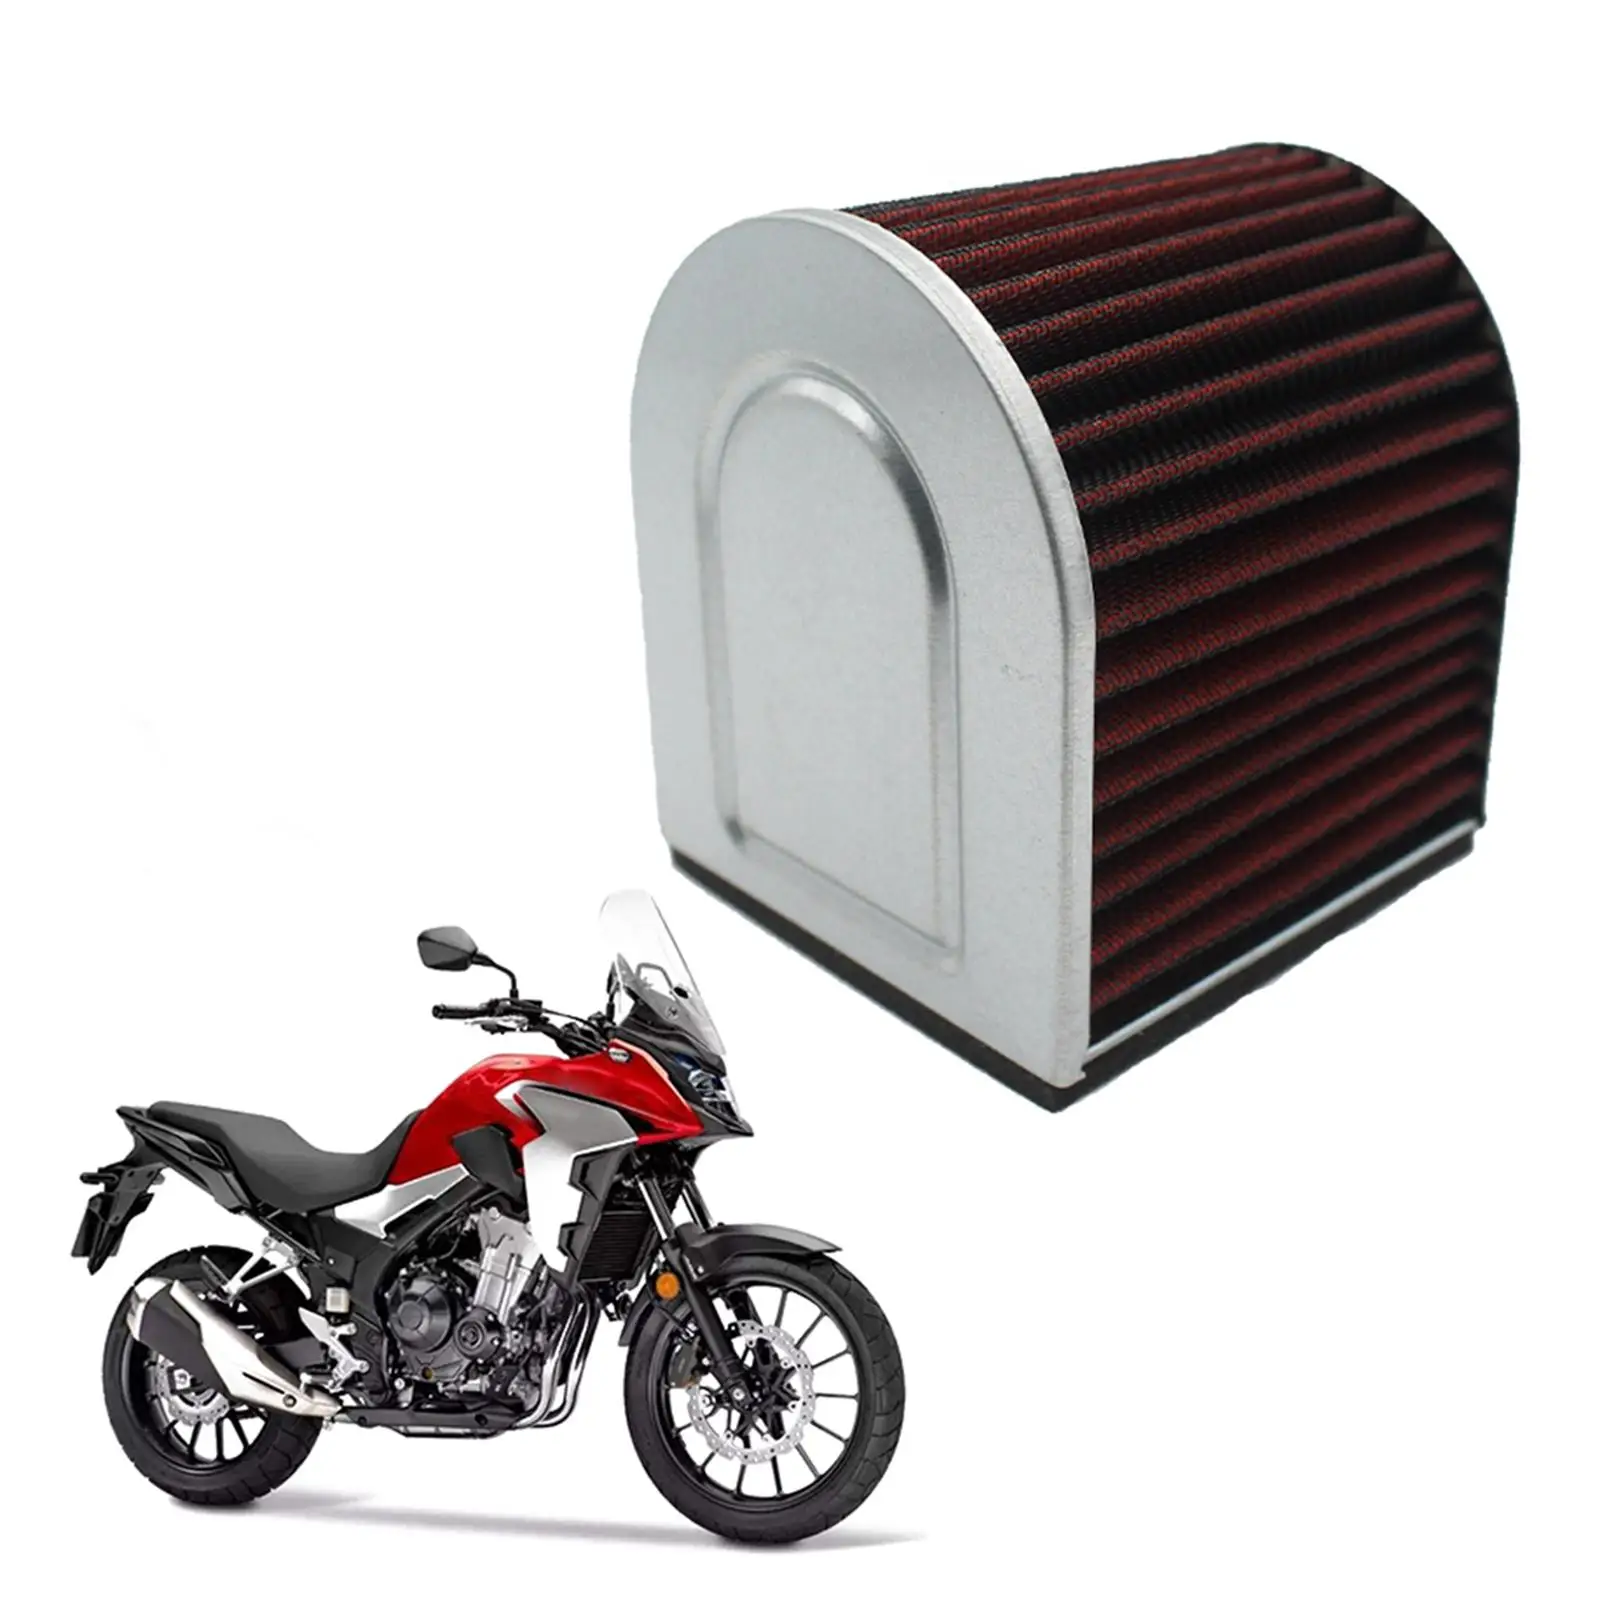 Motorcycle Air Filter 17211-Mkp-J00 Air Filters Accessories Motorcycle Parts for Honda CB500F 2019-2021 CBR 500R CBR500RA